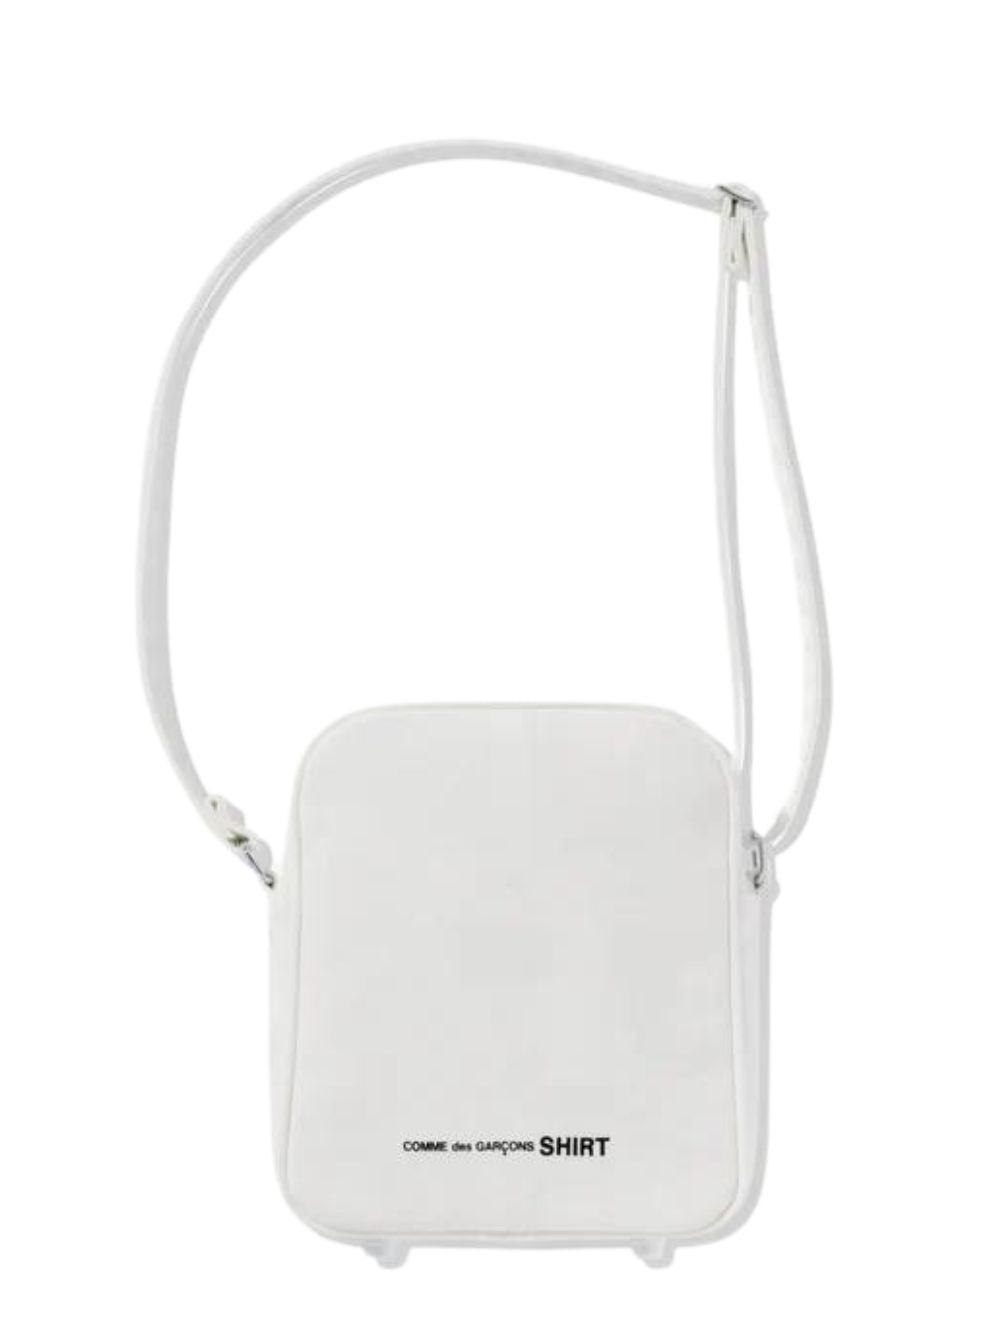 Andy Warhol Shoulder Bag (White Print G)